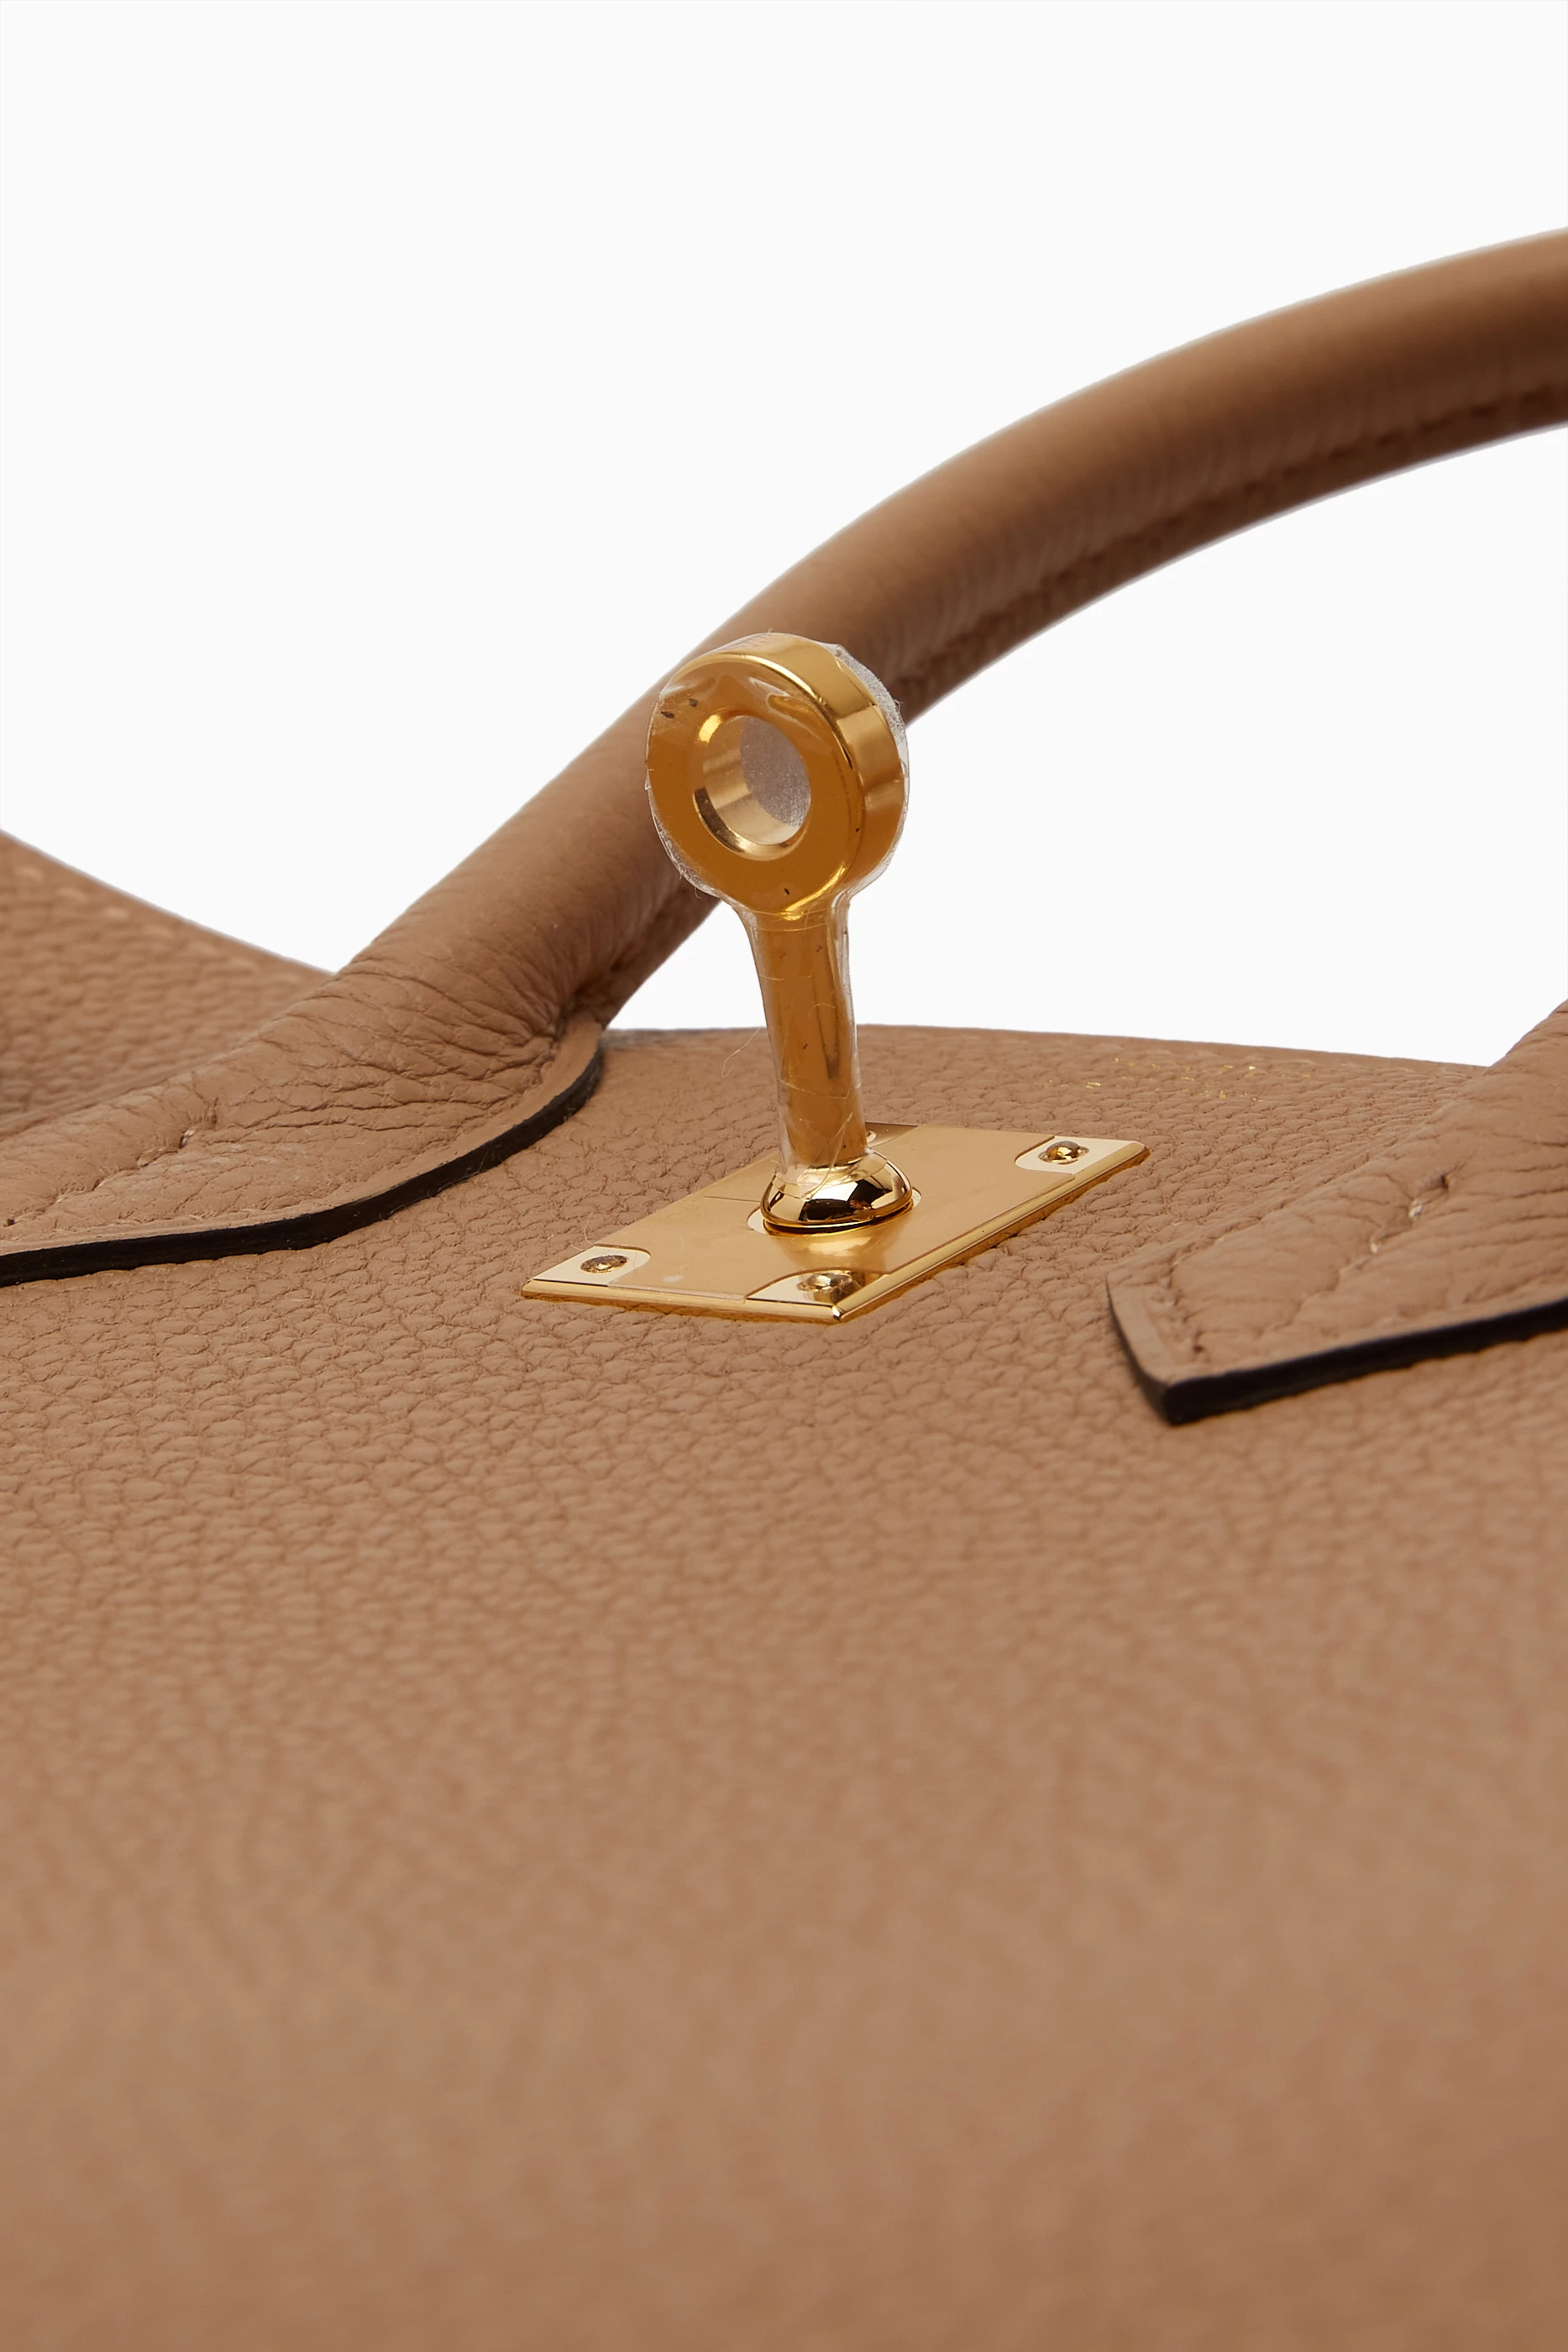 Hermès - Authenticated Birkin 25 Handbag - Leather Grey Plain for Women, Never Worn